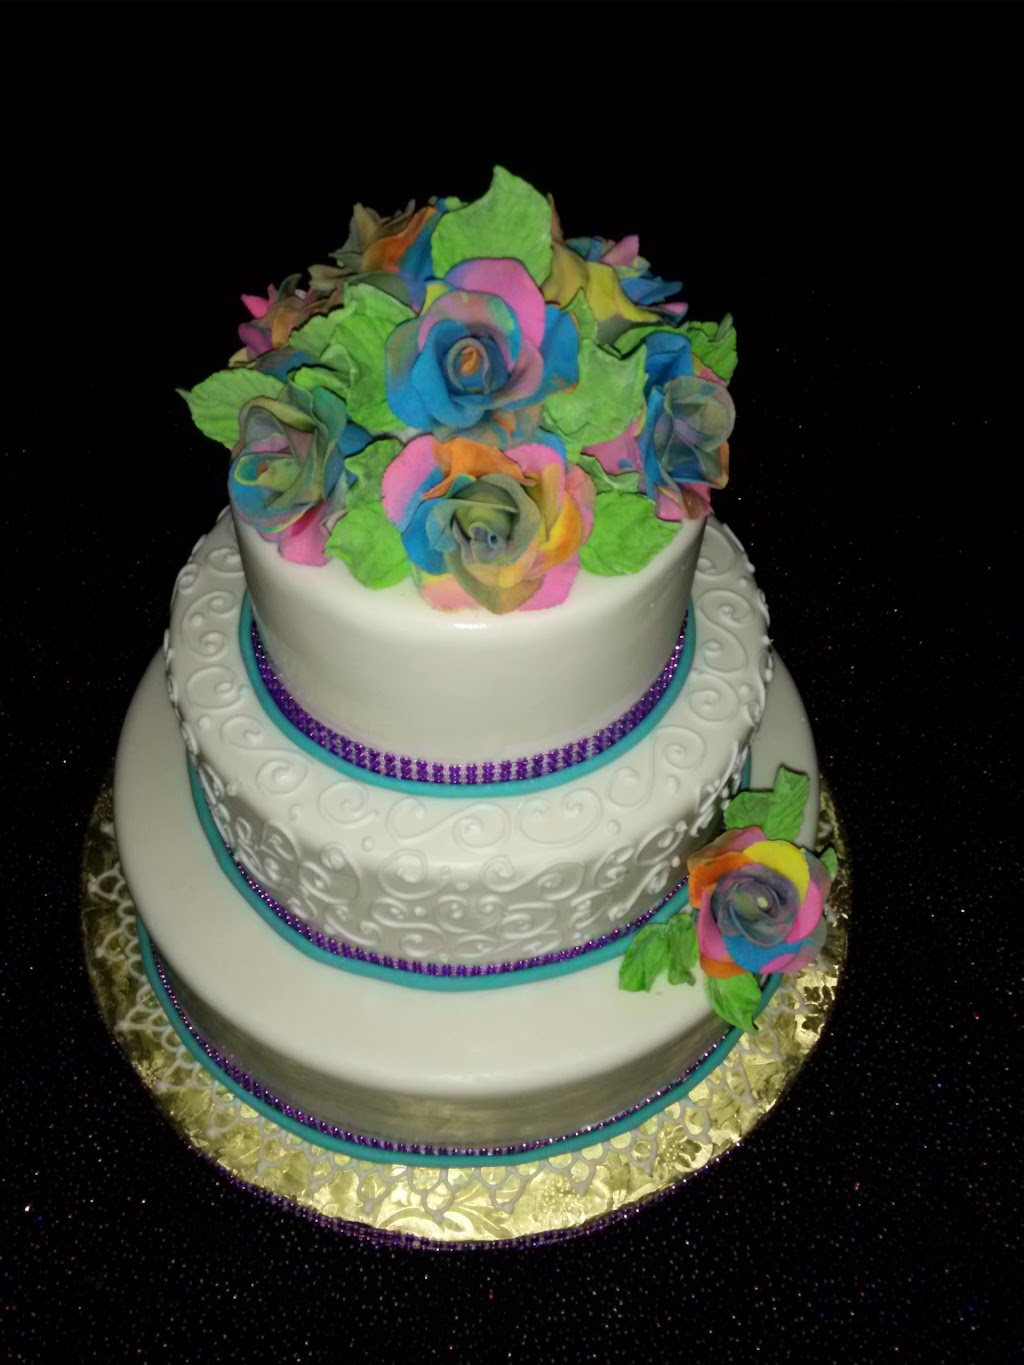 Karys Wedding Cakes, LLC | 304 Cardiff Dr, Kissimmee, FL 34758, USA | Phone: (407) 219-6357